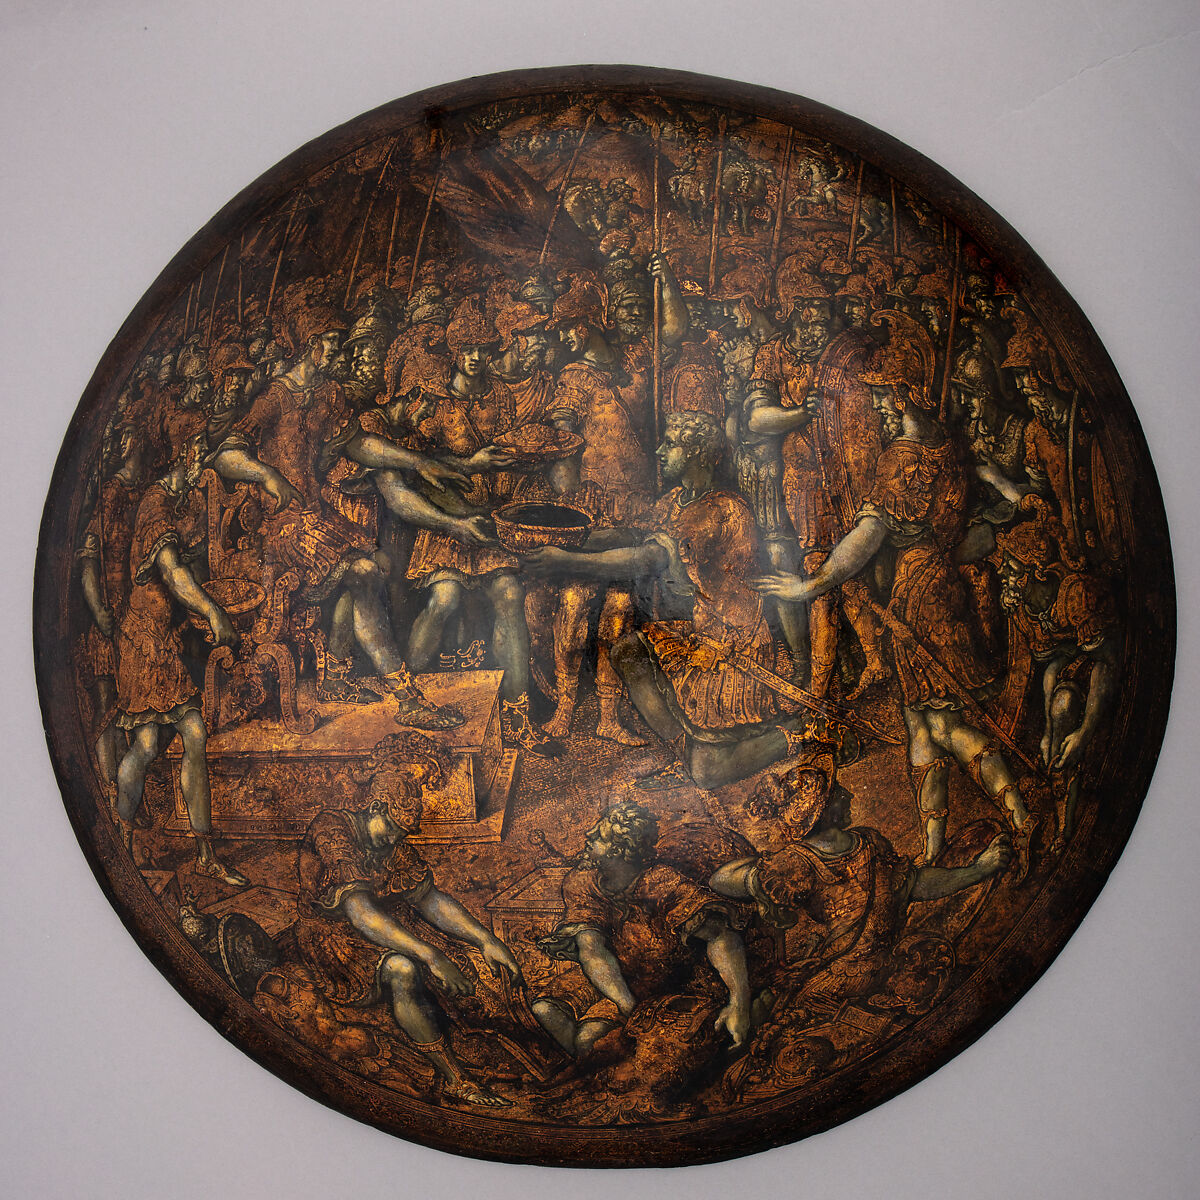 Shield, Attributed to Girolamo da Treviso (Italian, Treviso ca. 1498–1544 Boulogne-sur-Mer), Wood, linen, gesso, gold leaf, polychromy, Italian, probably Bologna 